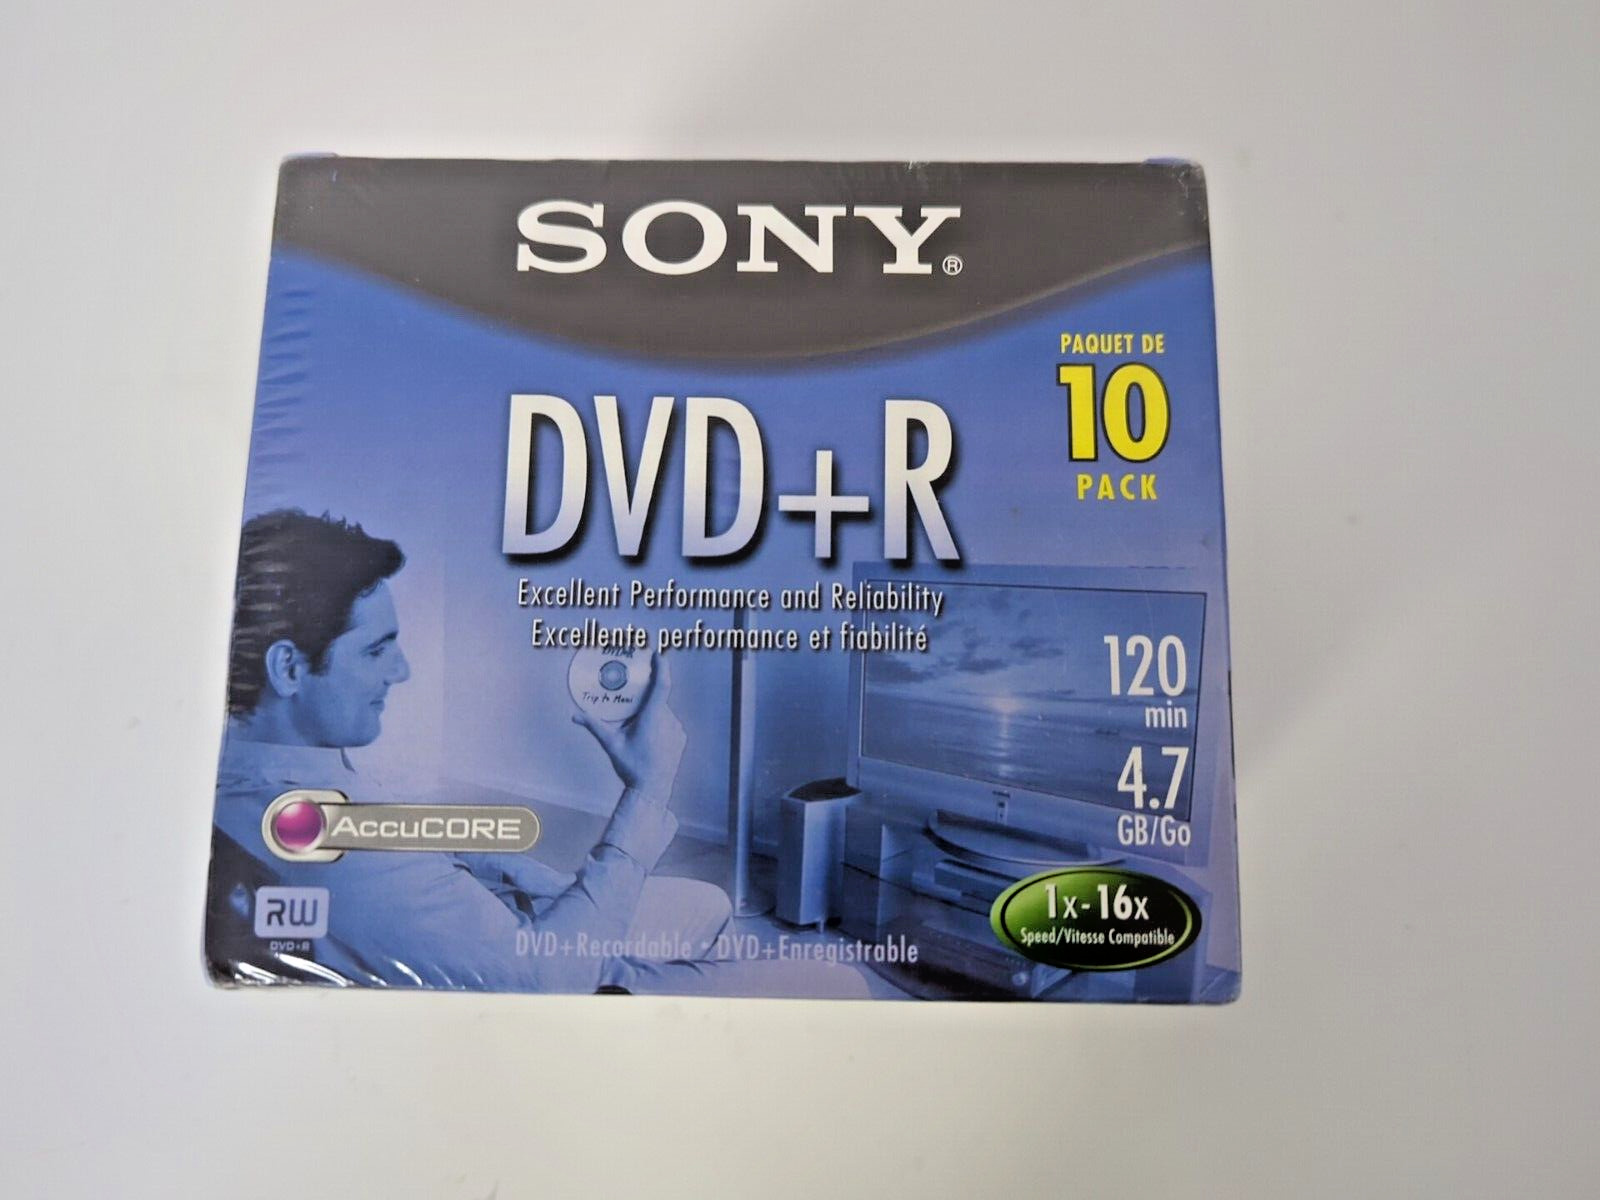 SONY DVD+R 10 PACK 120min 4.7 GB/Go